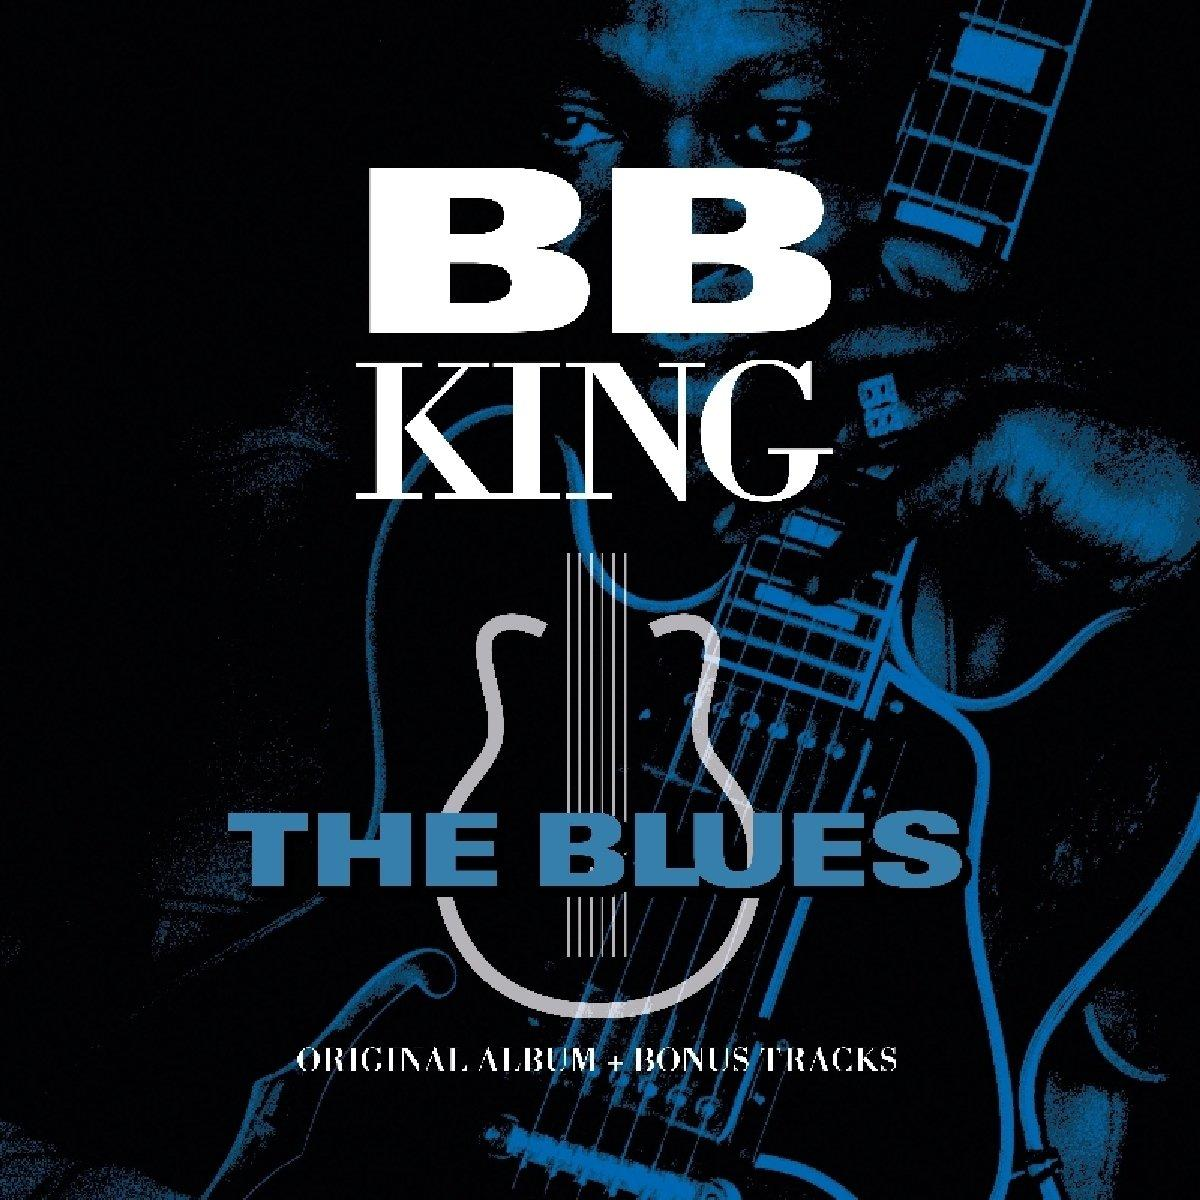 B.B. King - The - Album (Vinyl) (transparent blau/gold Blues-Original